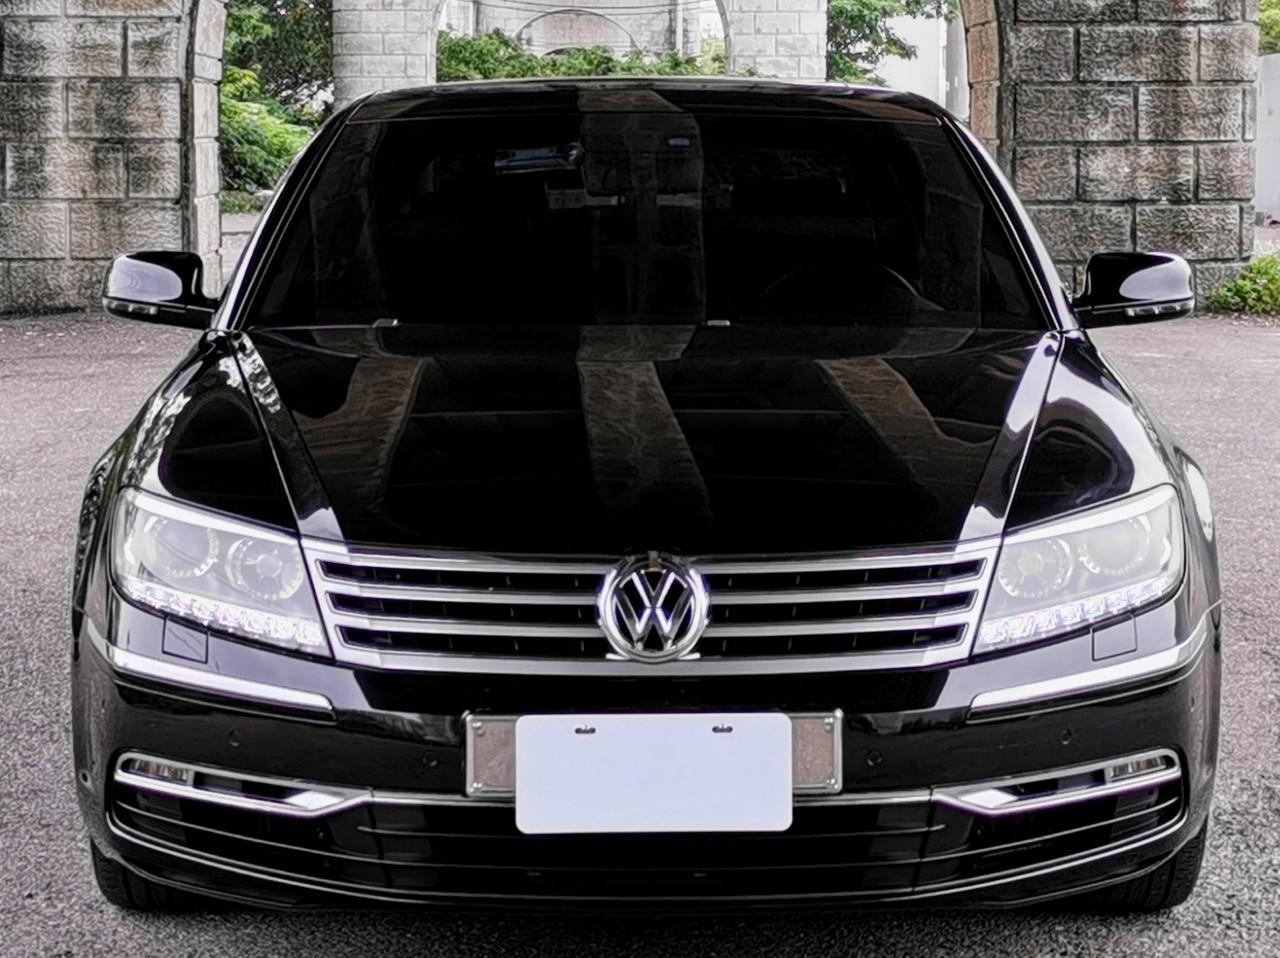 Volkswagen 二手車買賣專門店-2012-PHEATON 3.0 V6 TDI